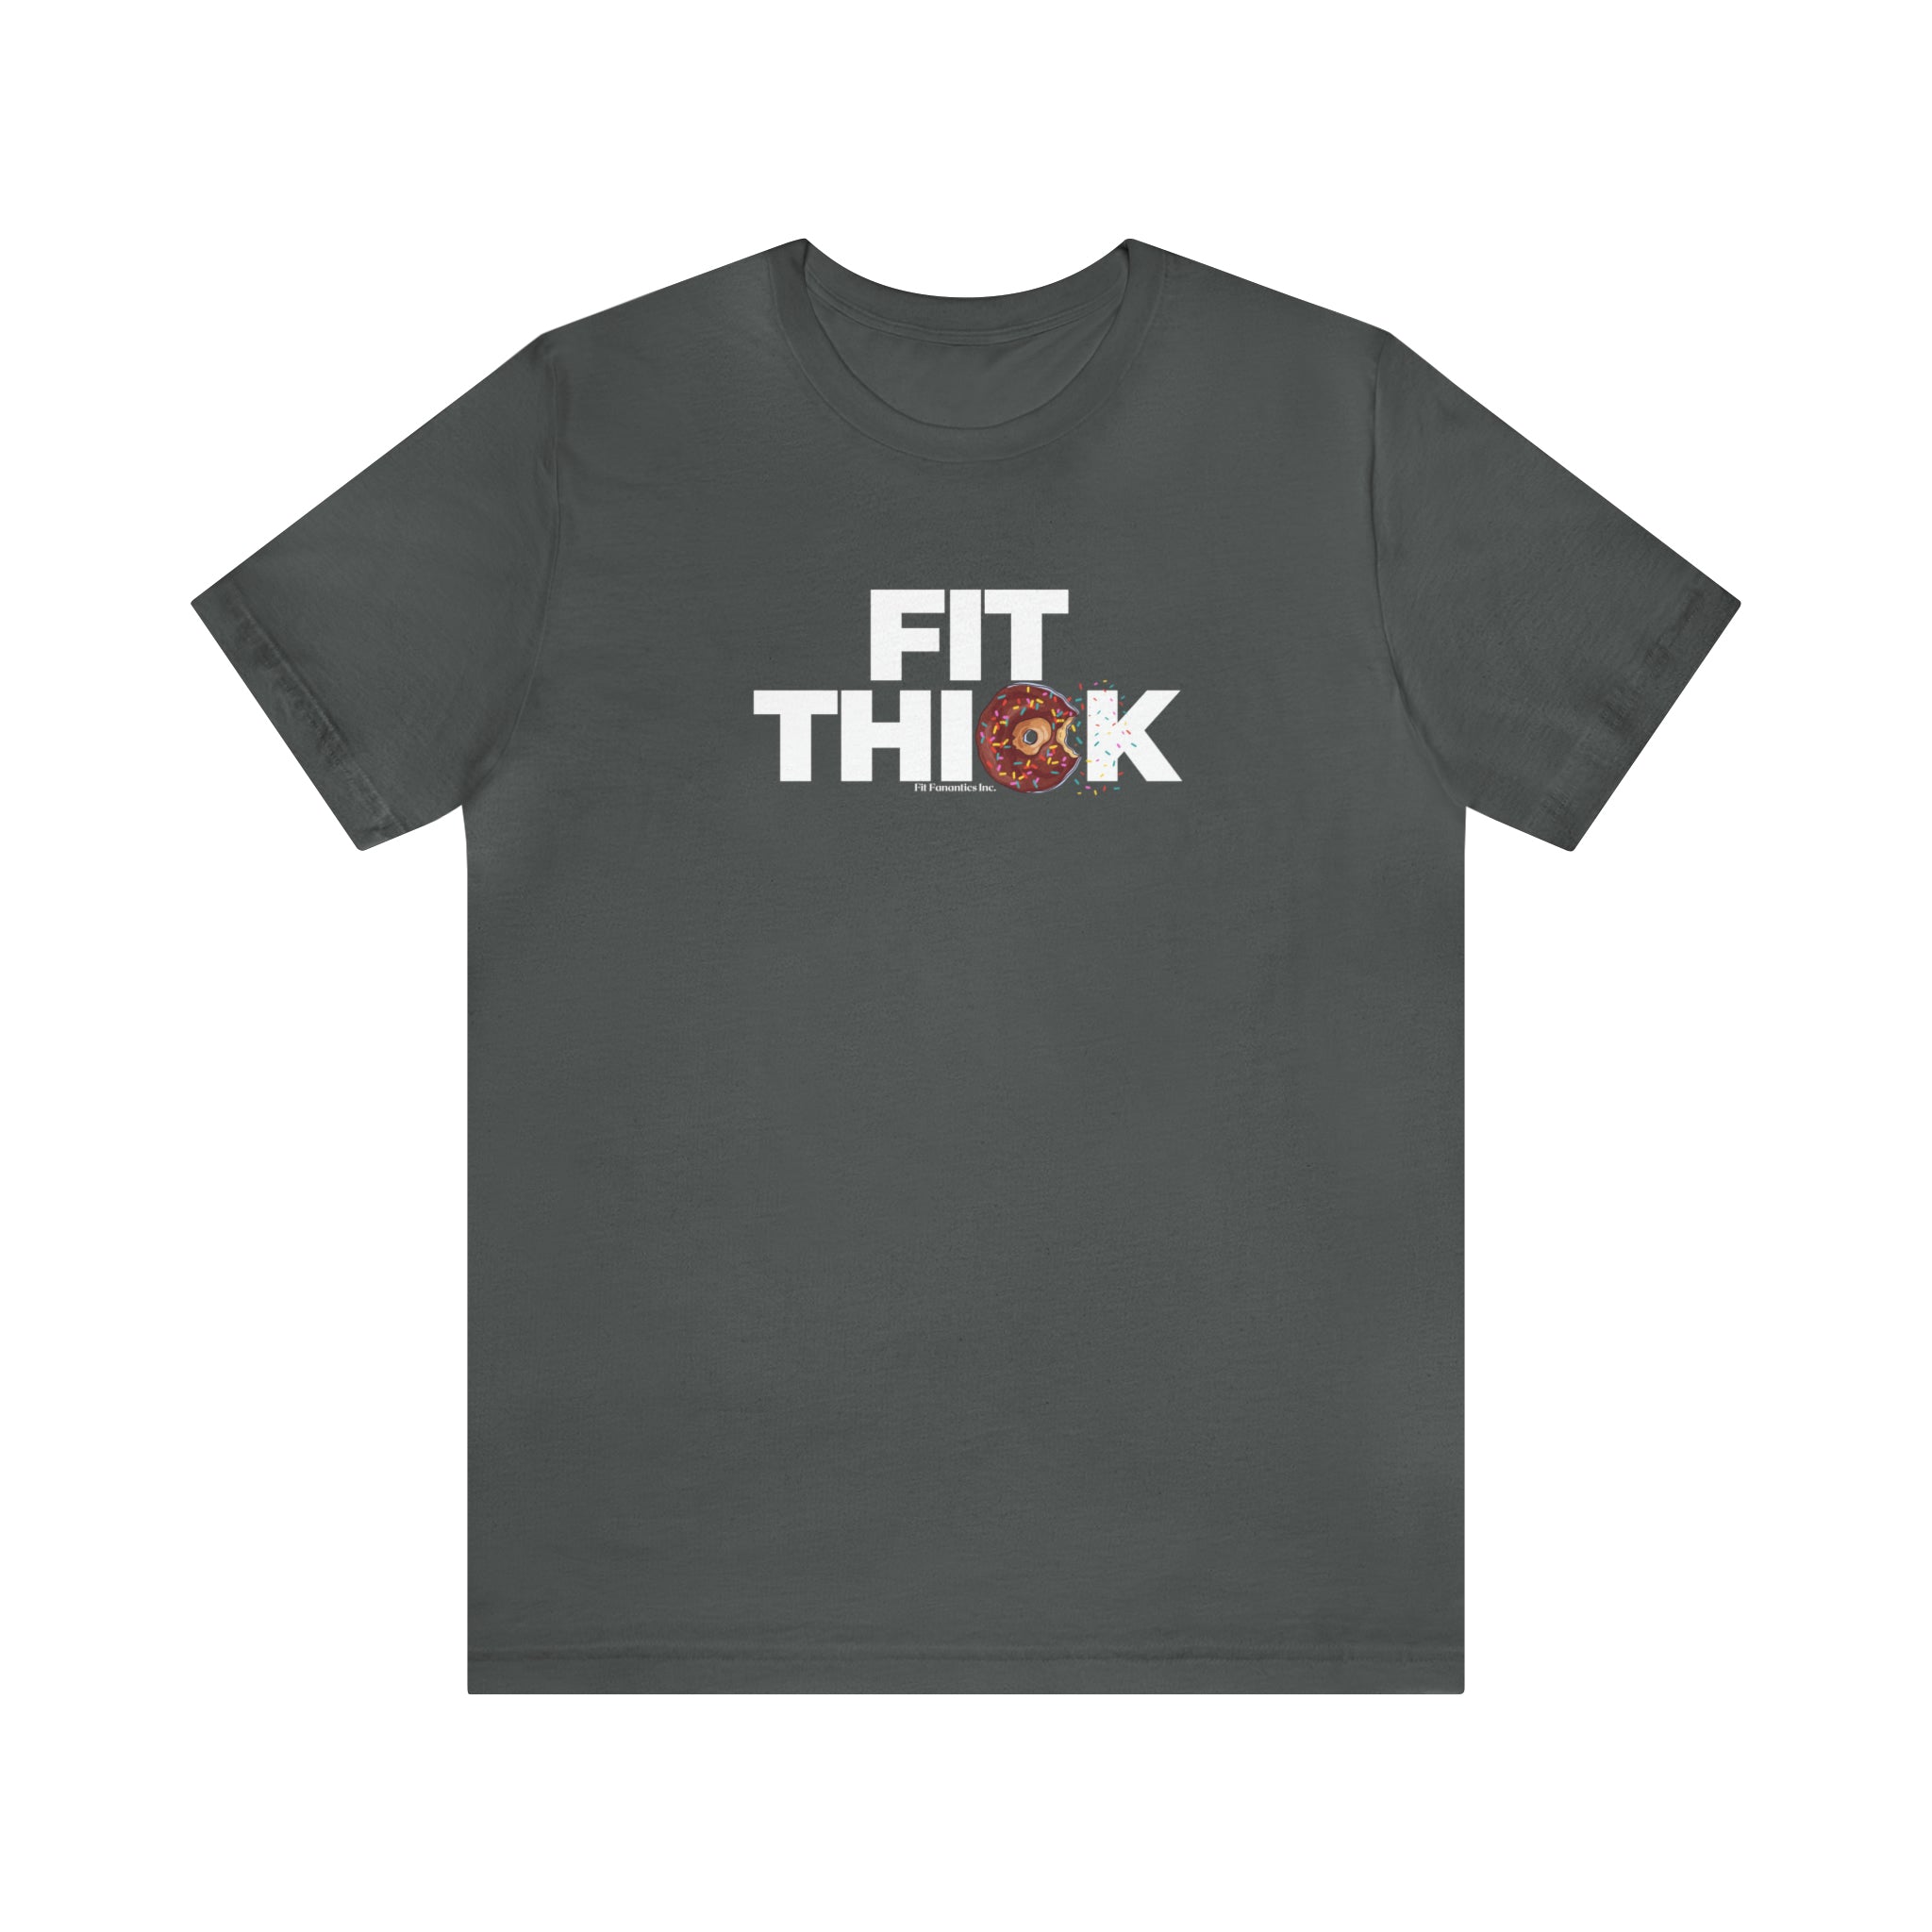 Fit Thick Unisex T-shirt